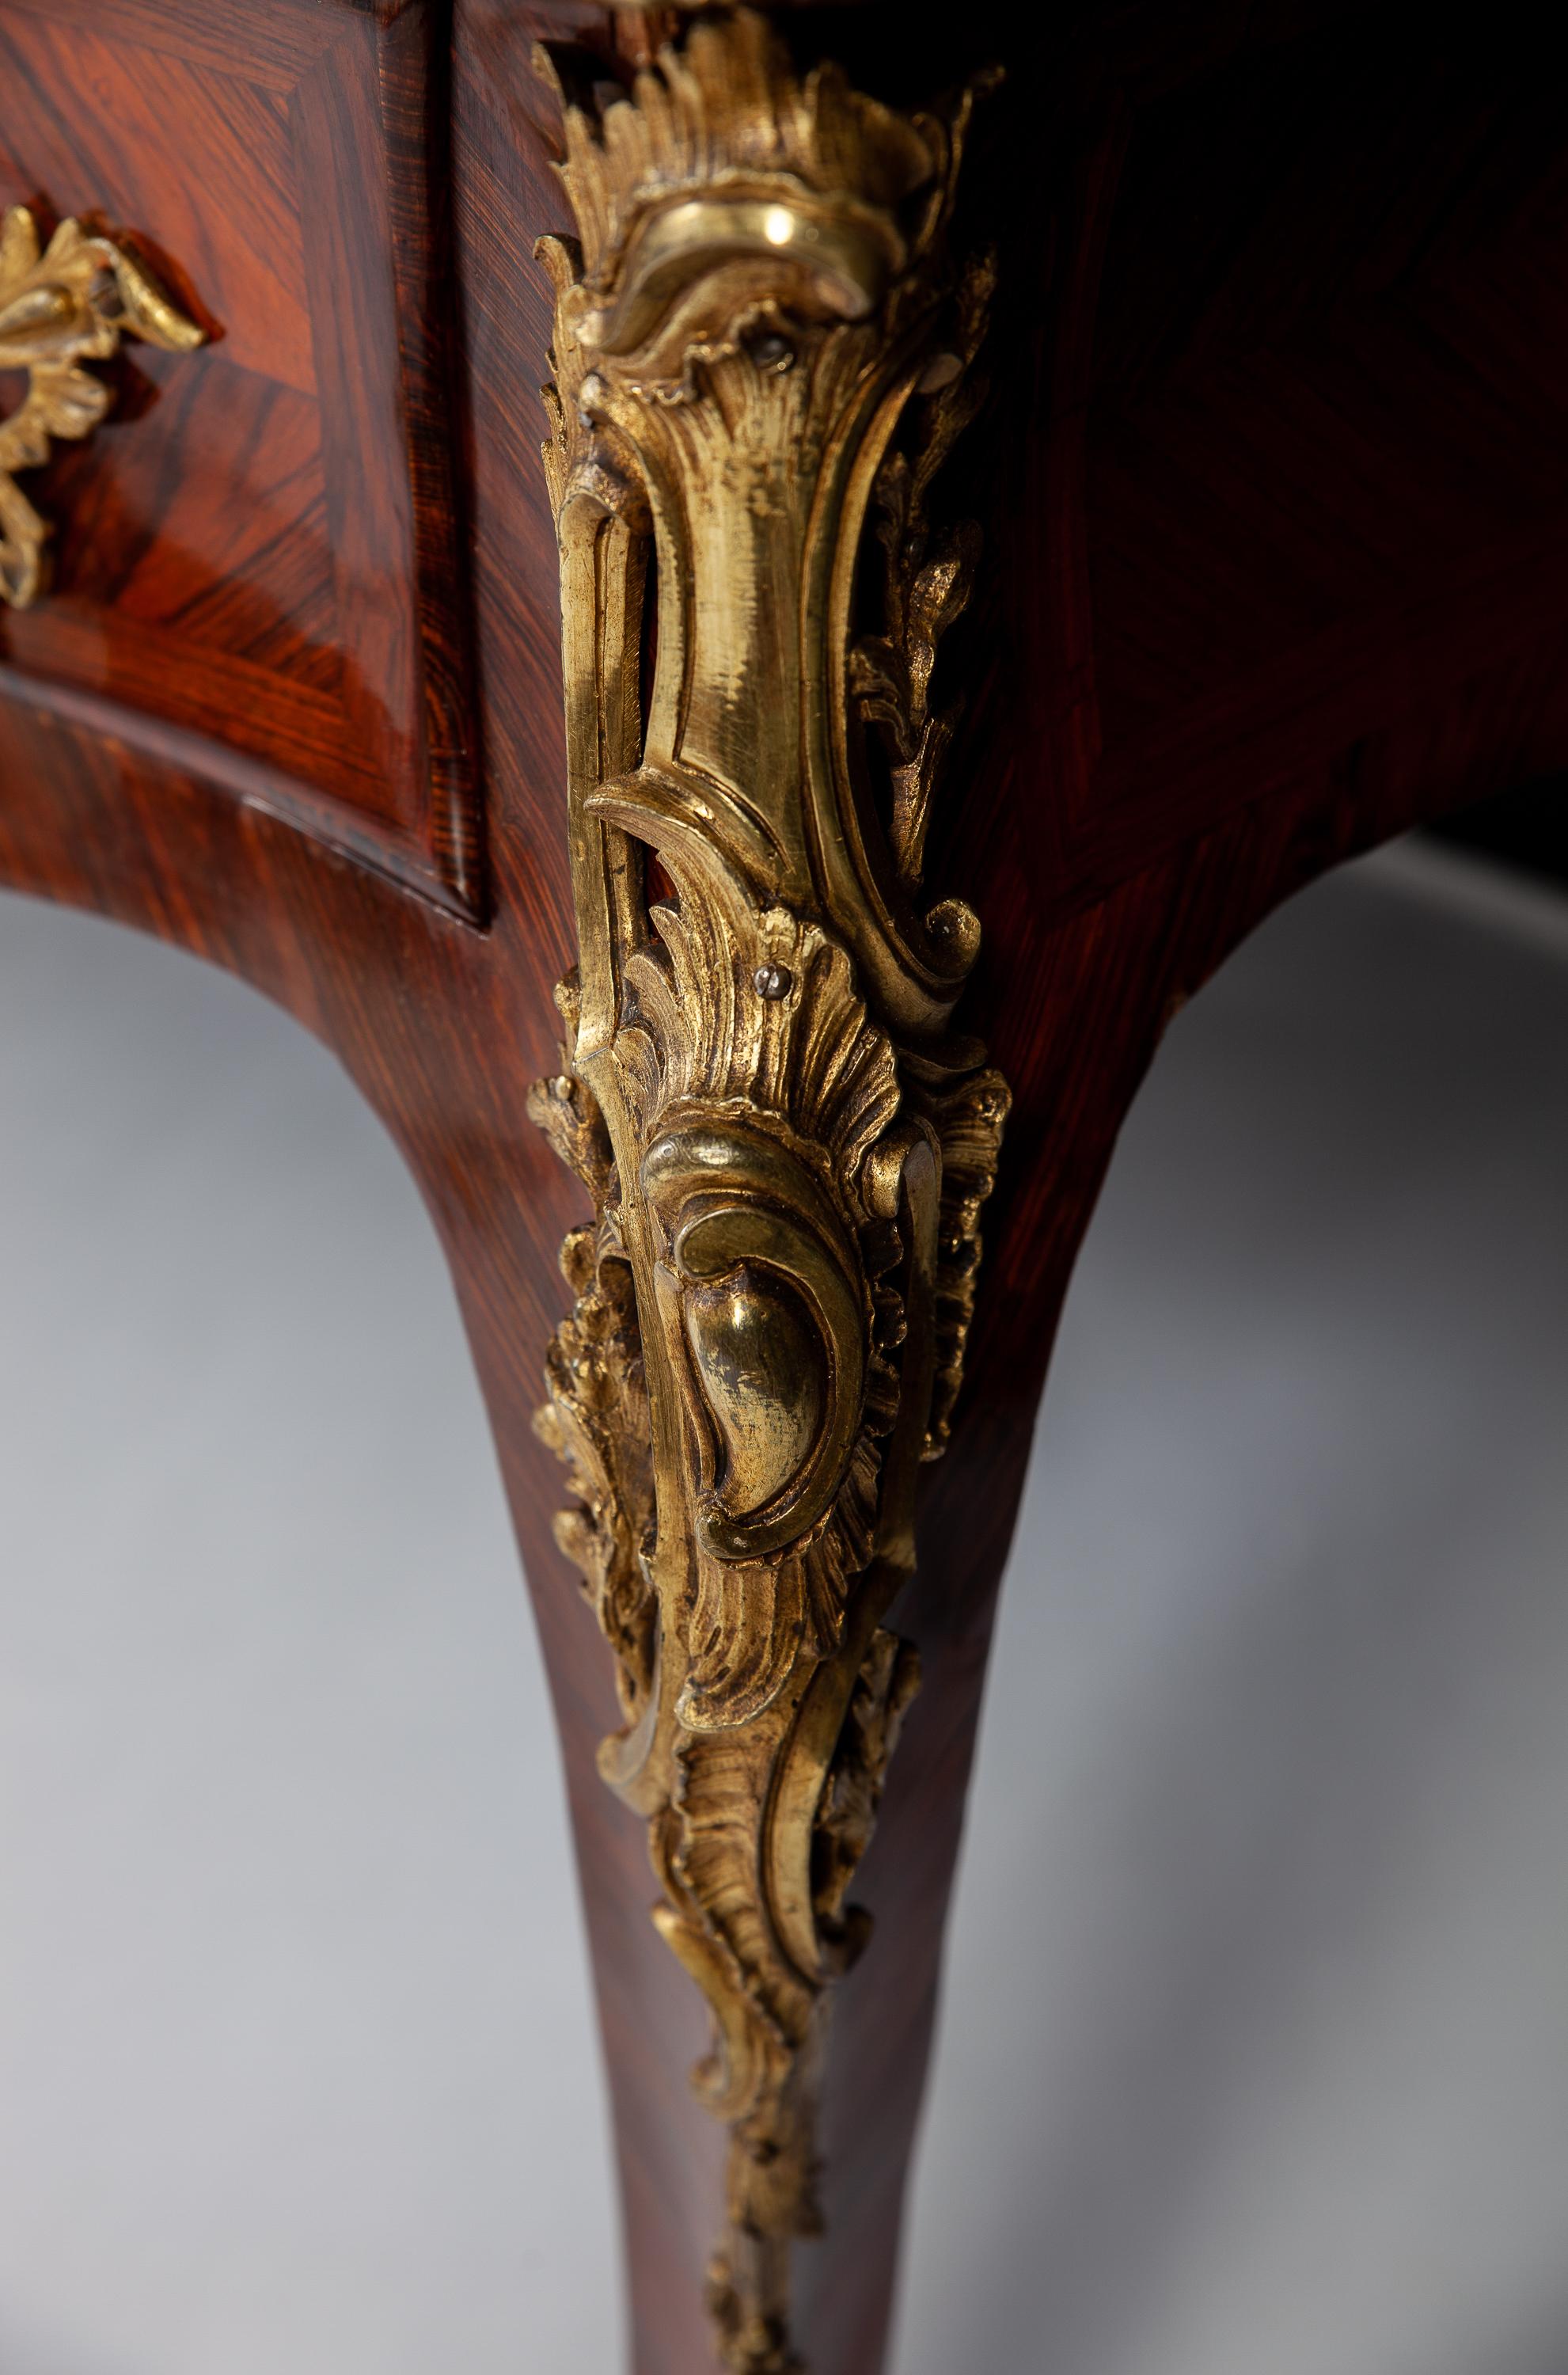 French 18th Century Louis XV Kingwood Gilt-Bronze Mounted  Bureau Plat Desk 1750 1